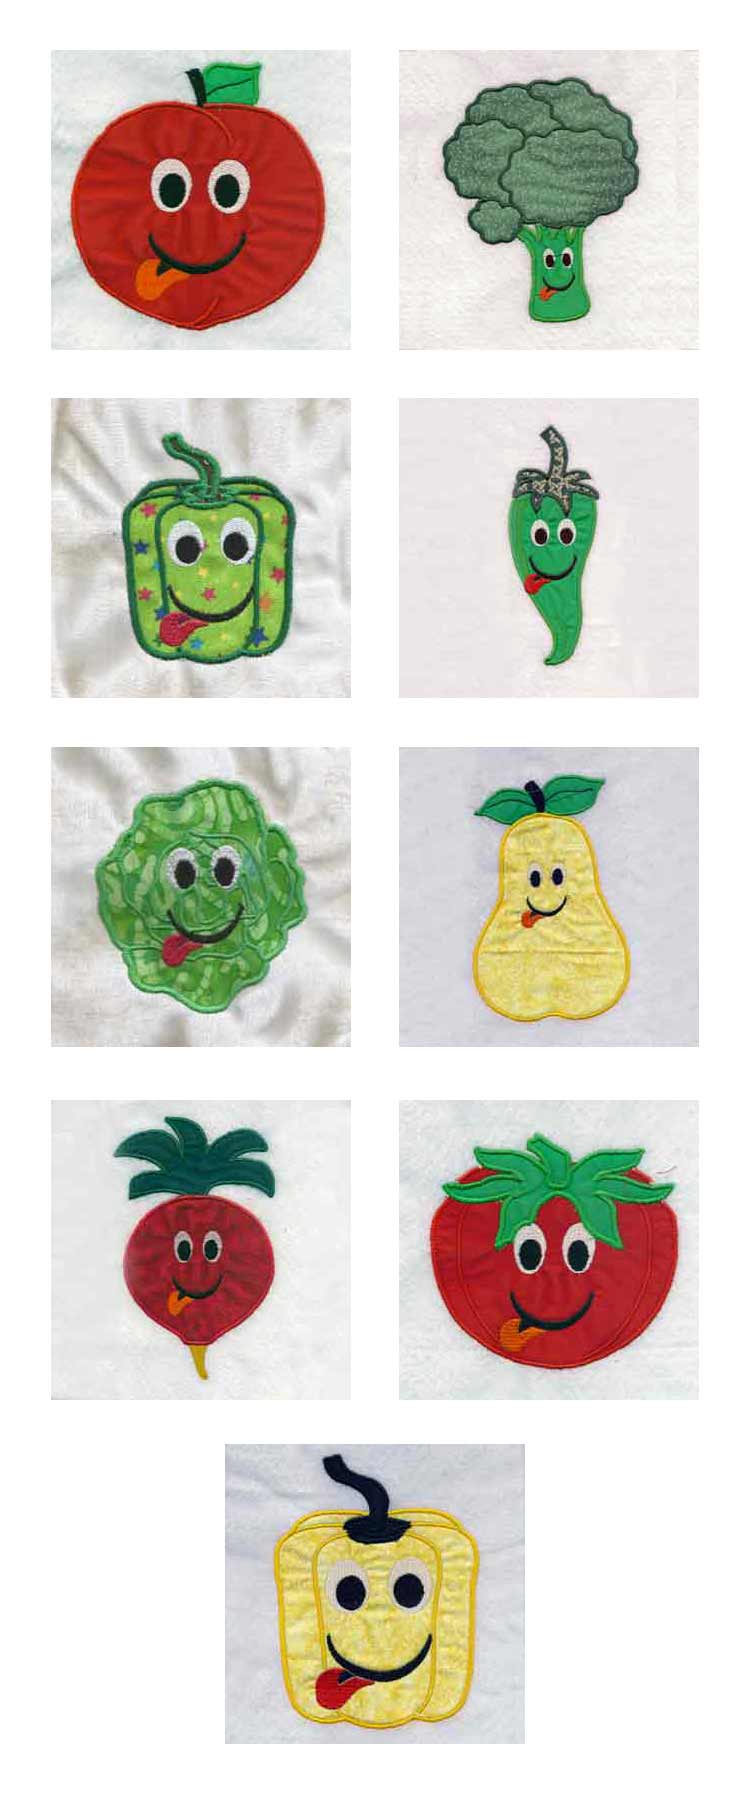 Applique Fruits and Veggies Embroidery Machine Design Details